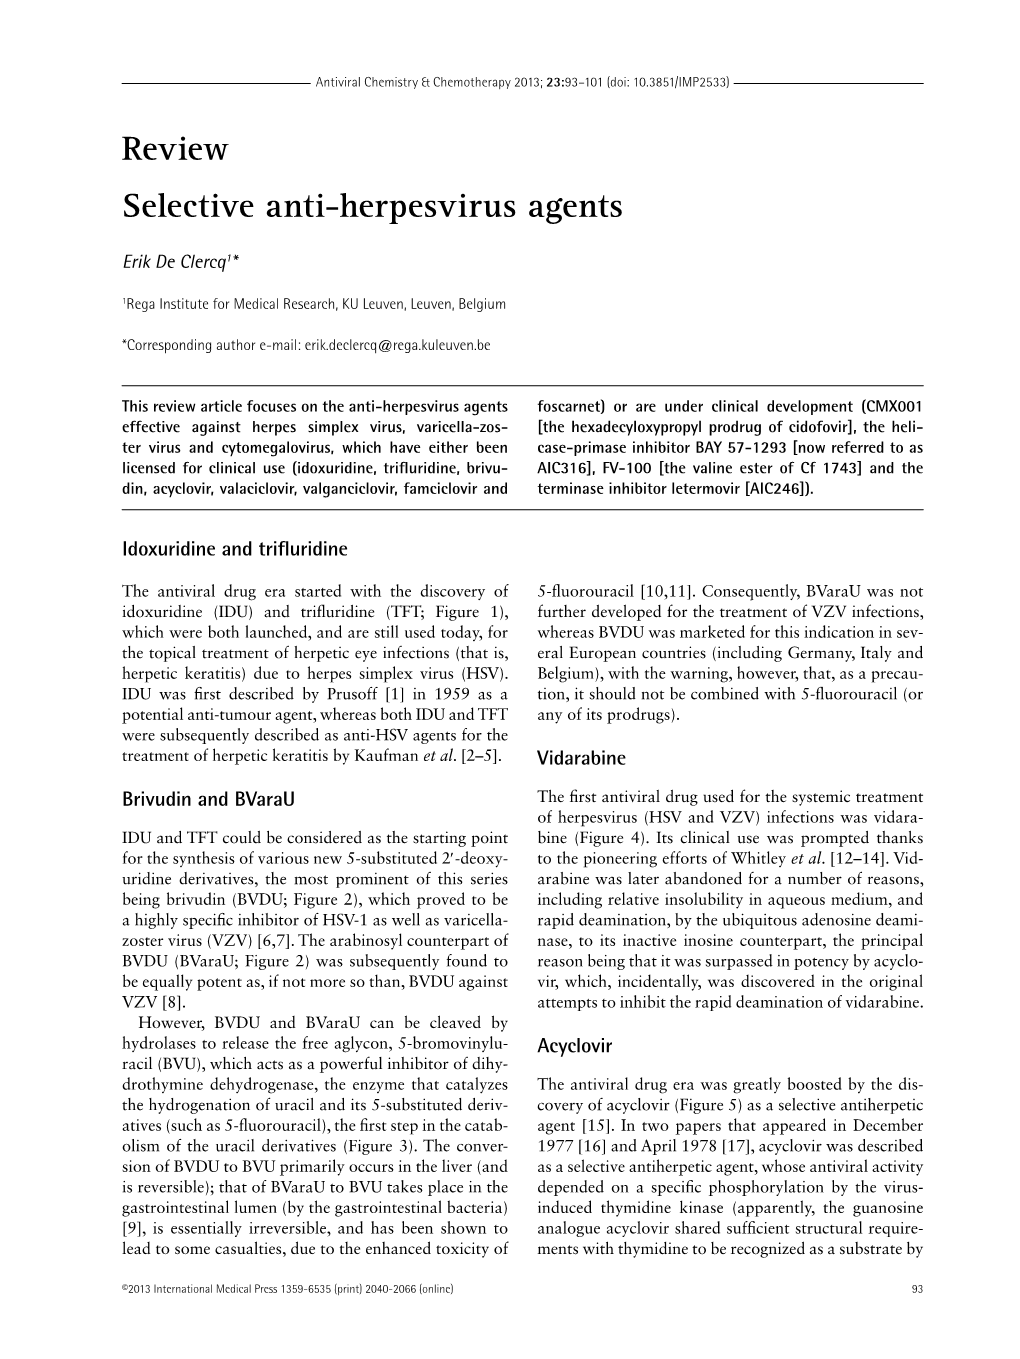 Review Selective Anti-Herpesvirus Agents